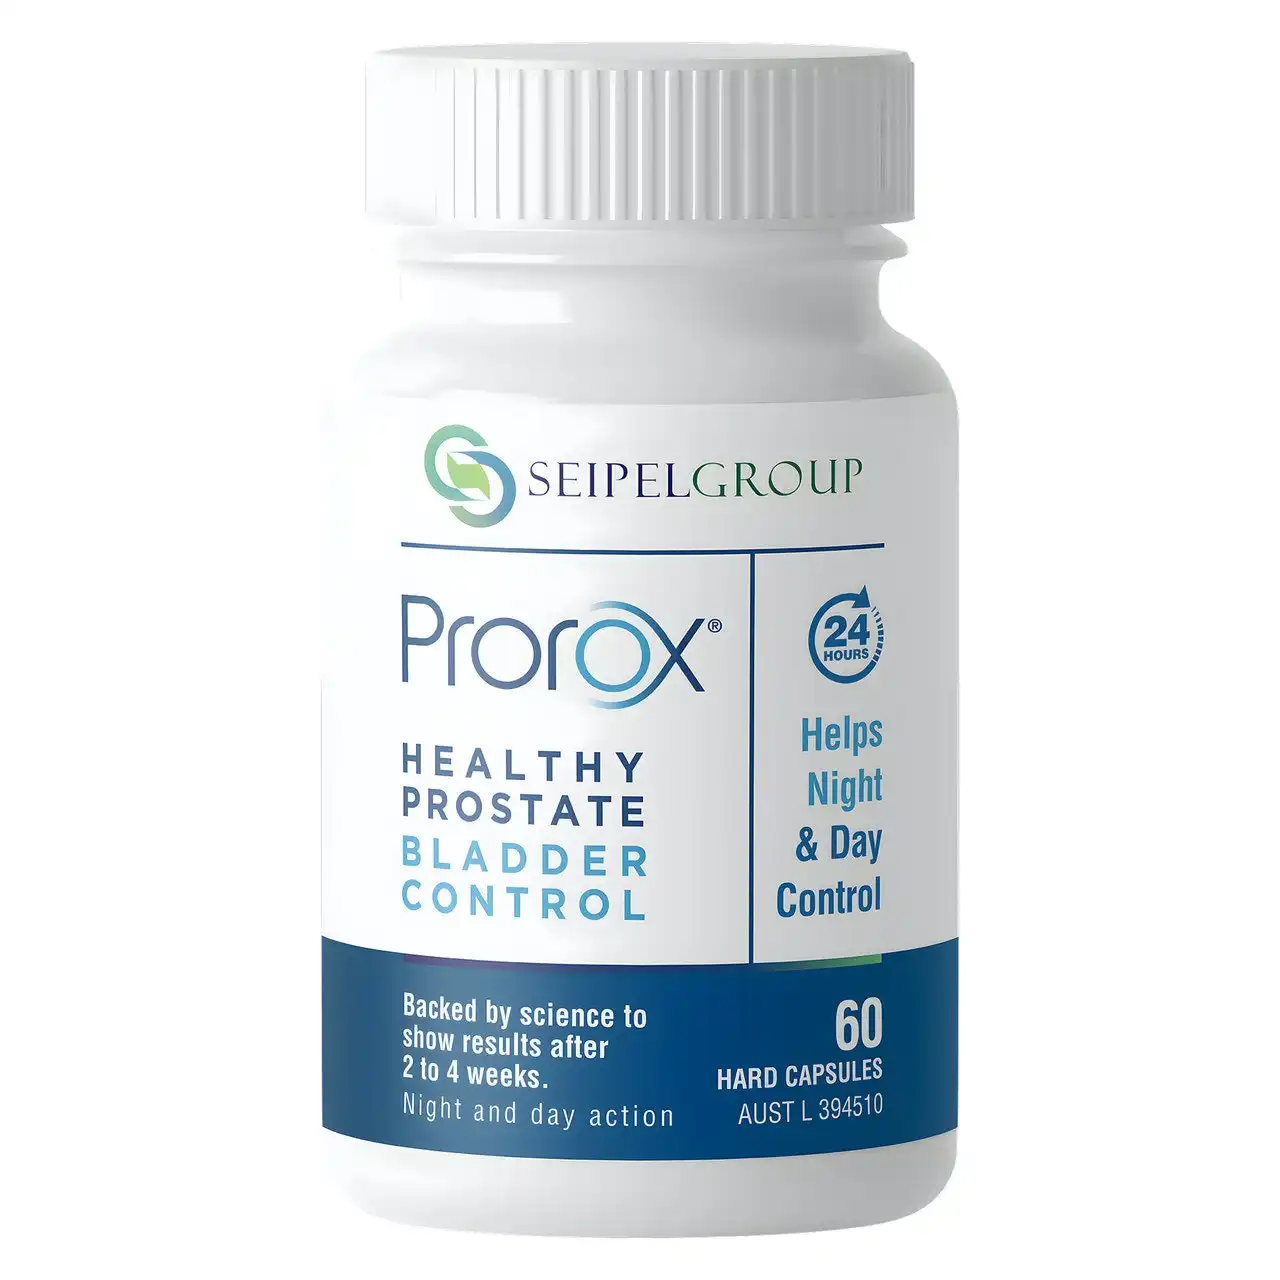 Prorox Prostate Health & Bladder Control Capsules 60